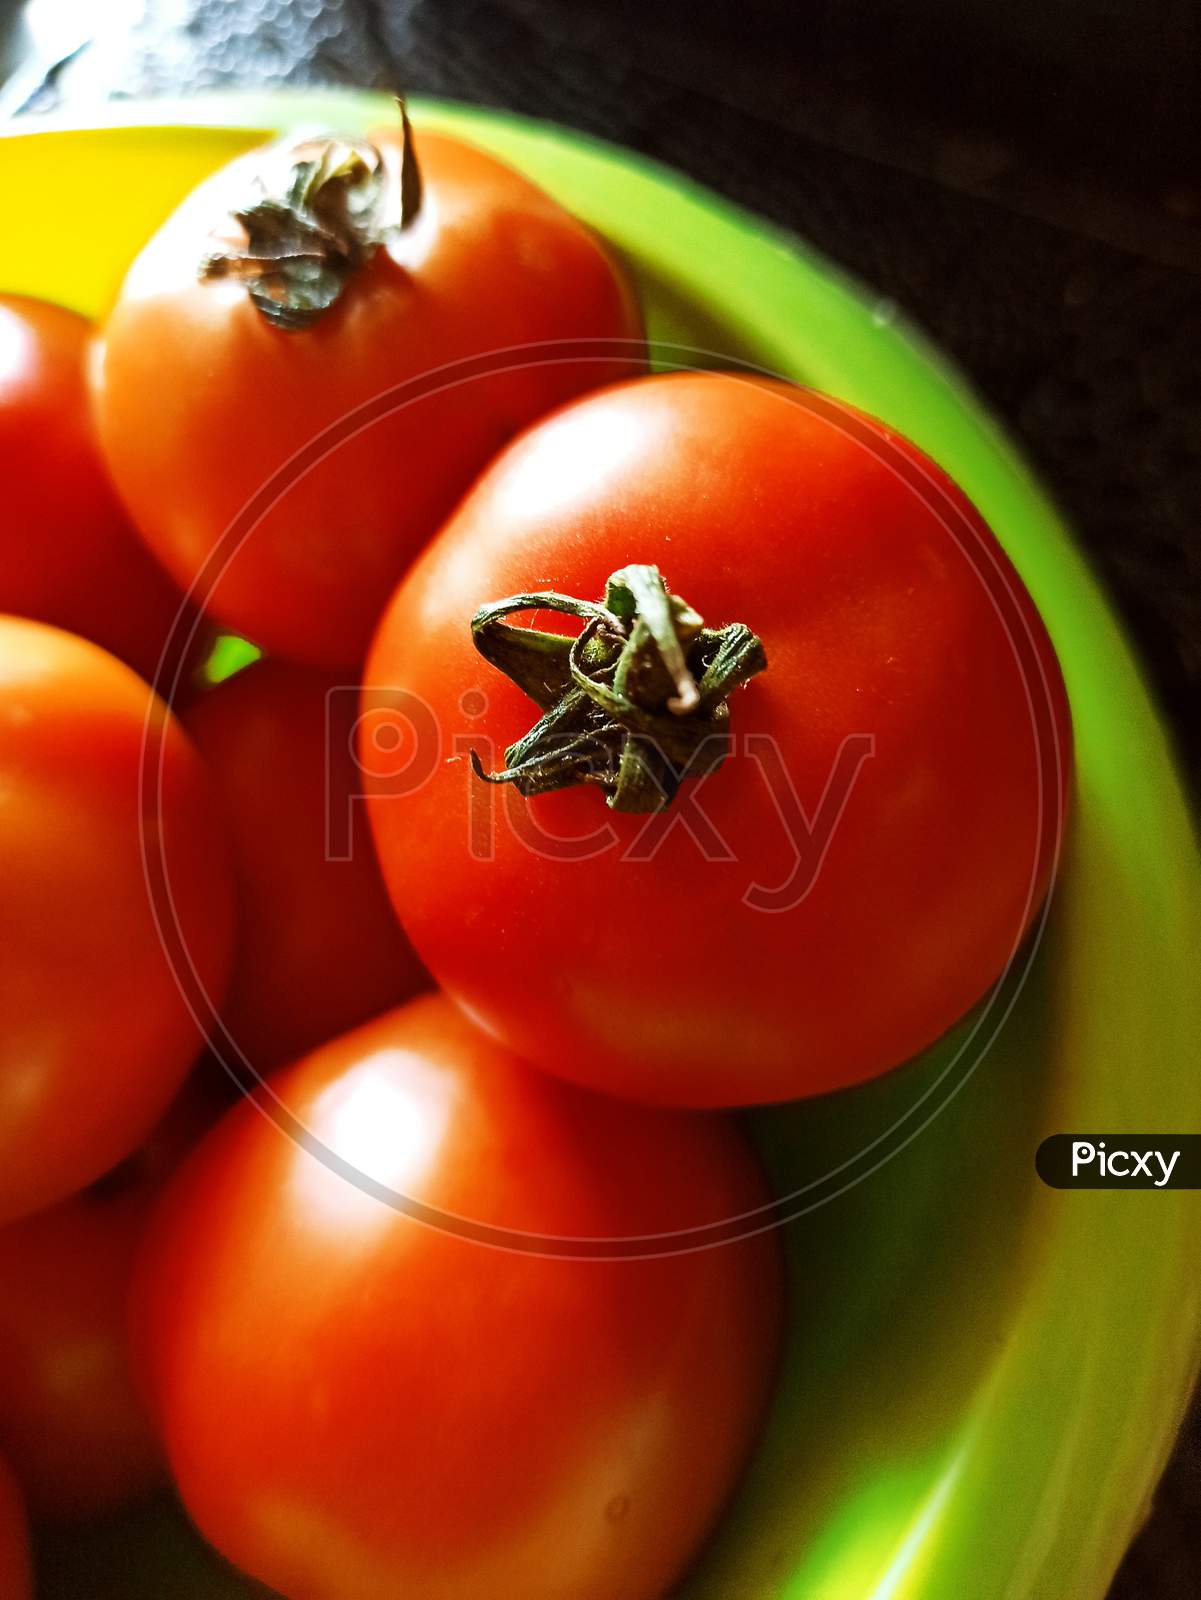 Tomato, vegetable, cherry tomatoes